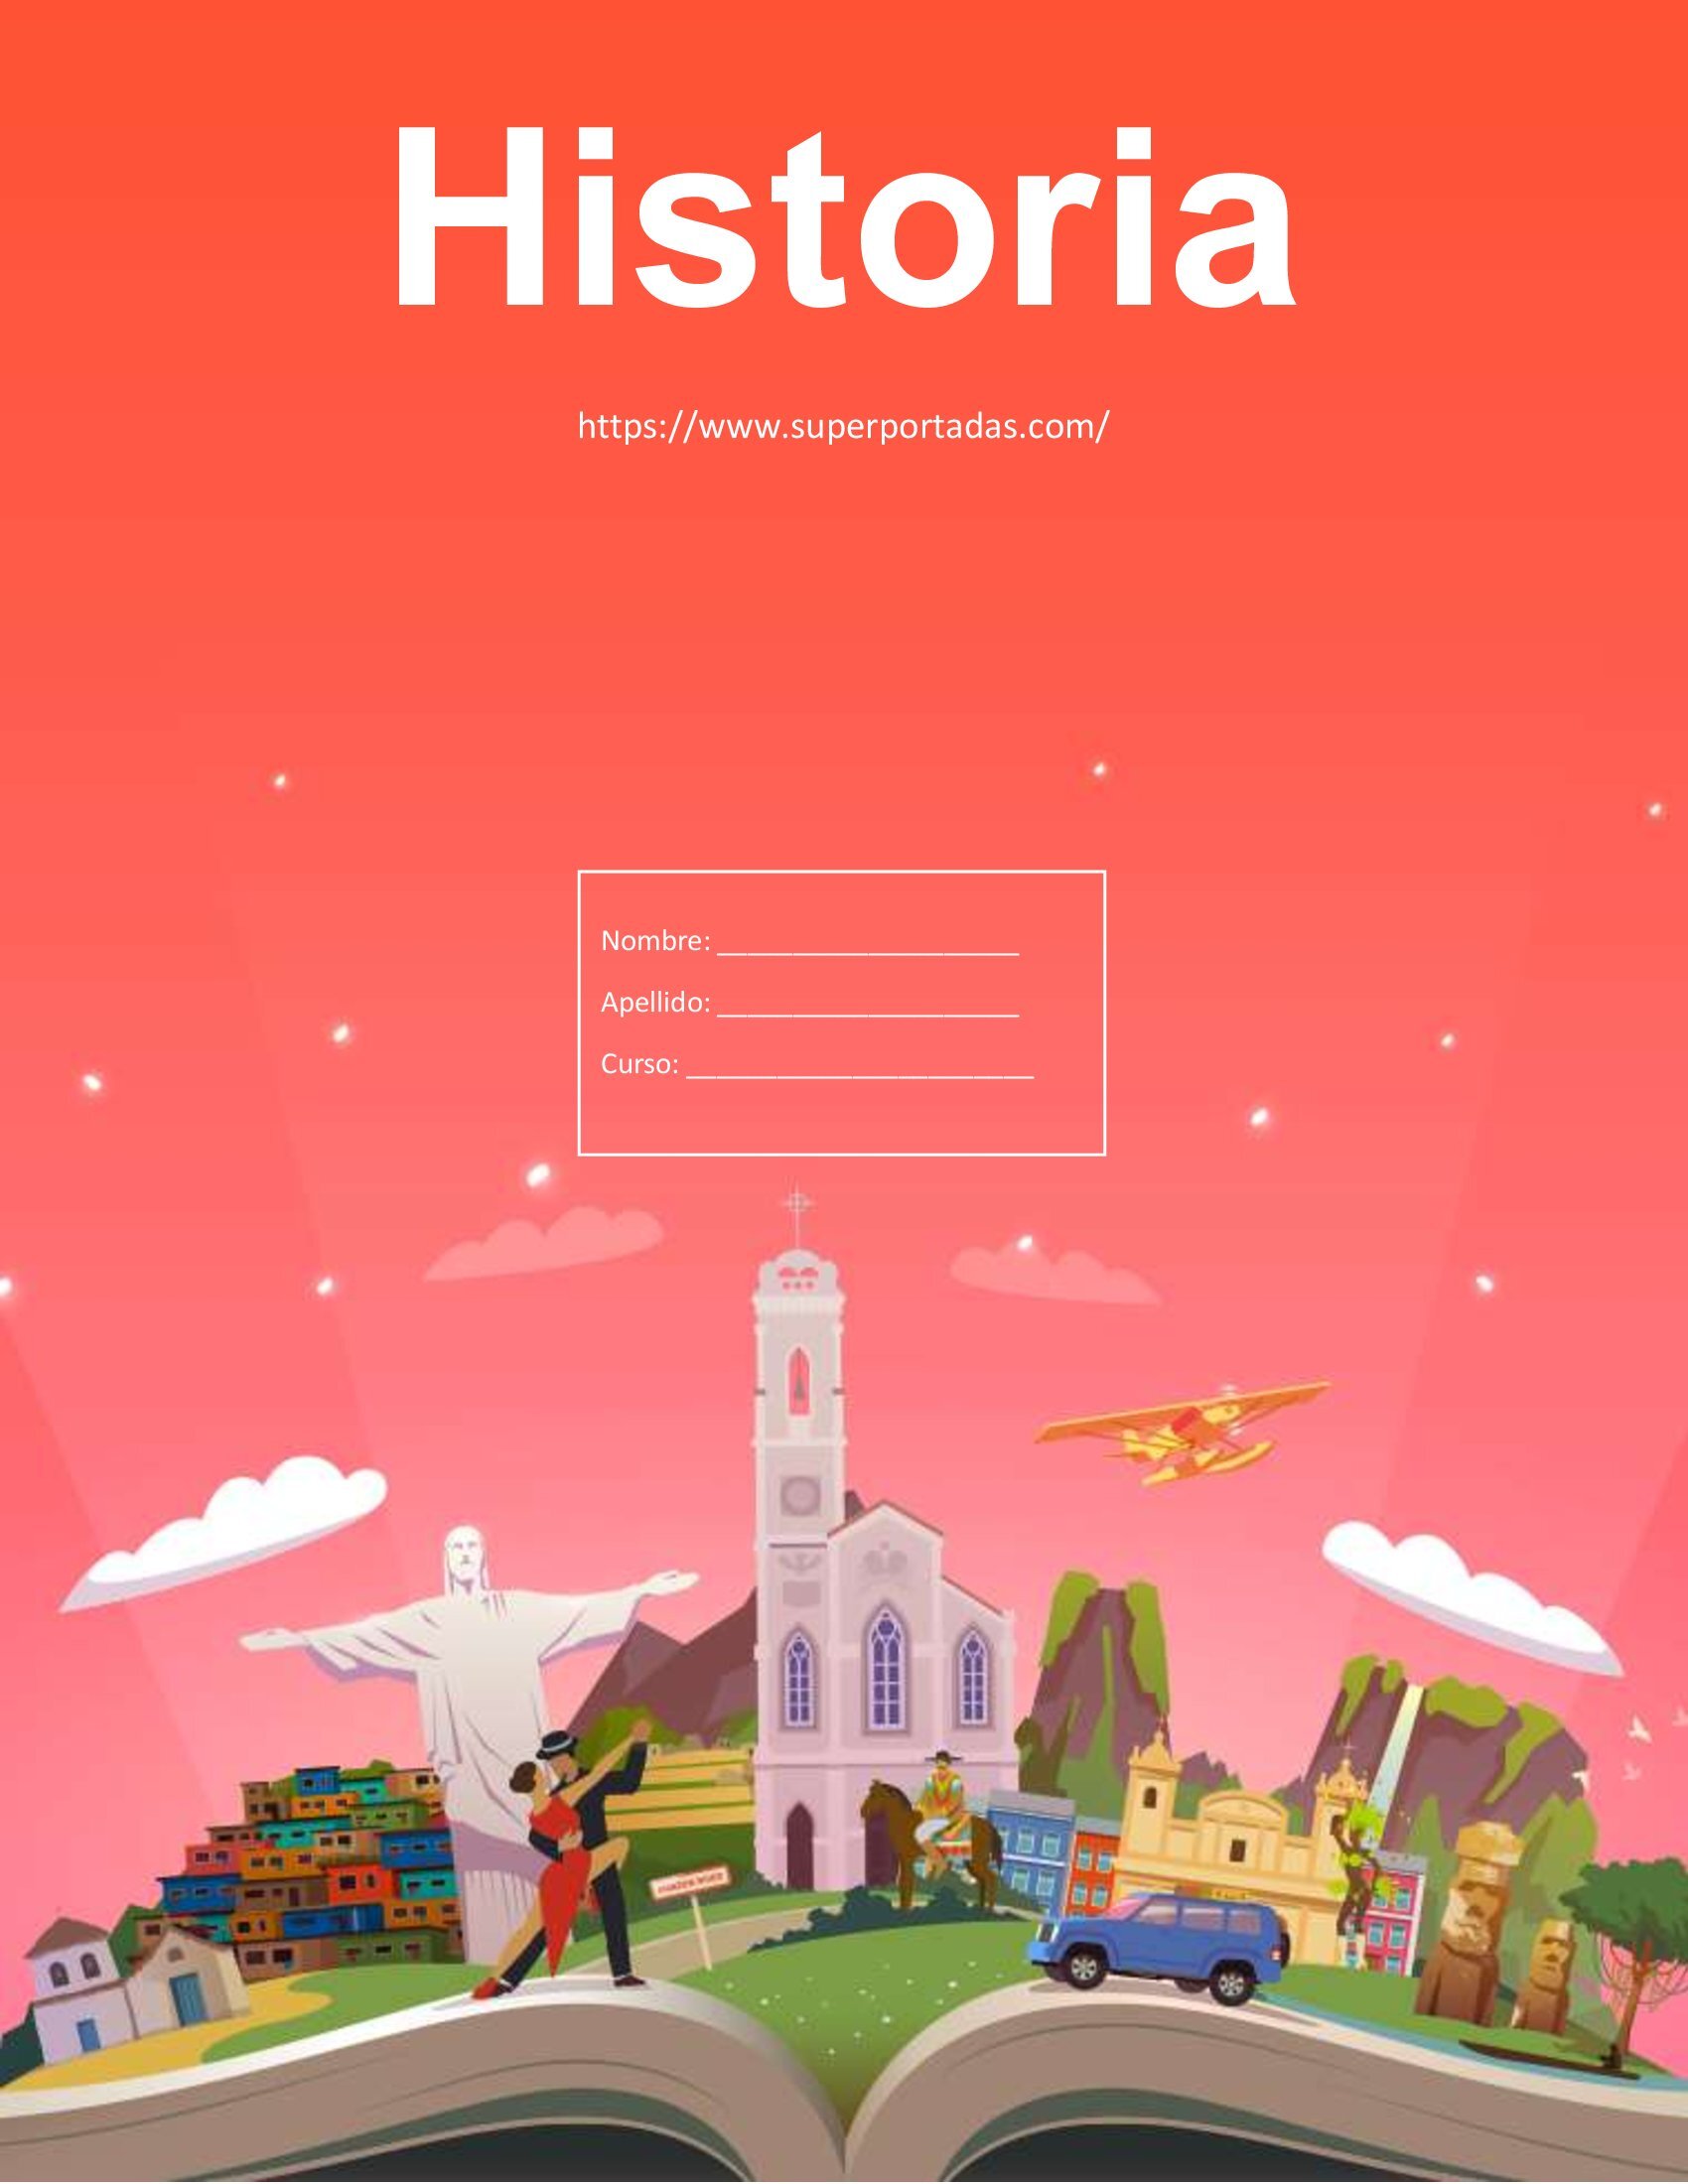 Portada AmericaLatina - historia